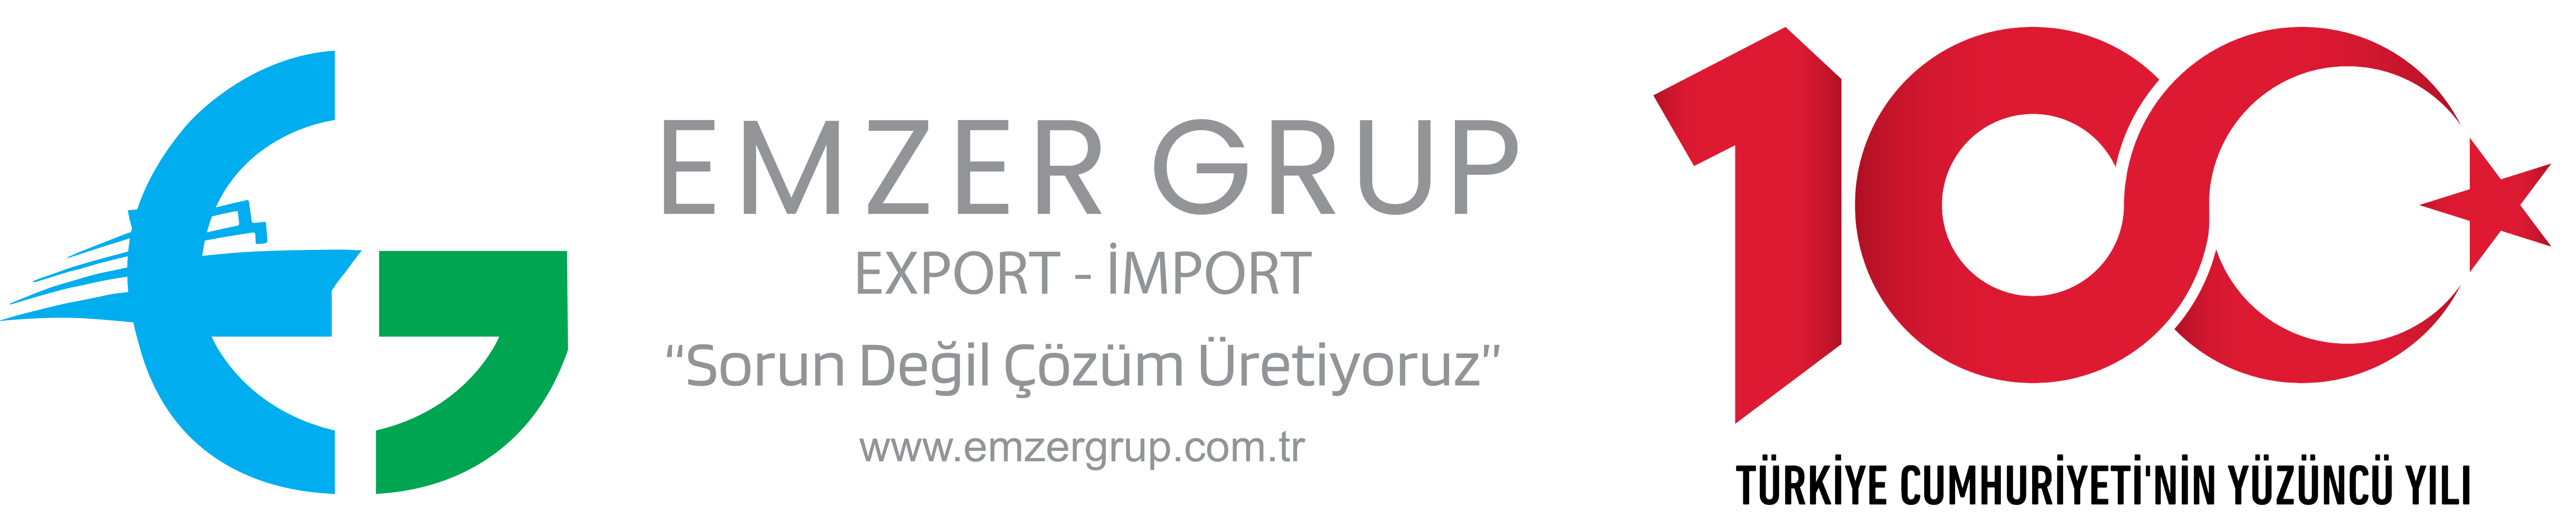 Emzer Grup Logo